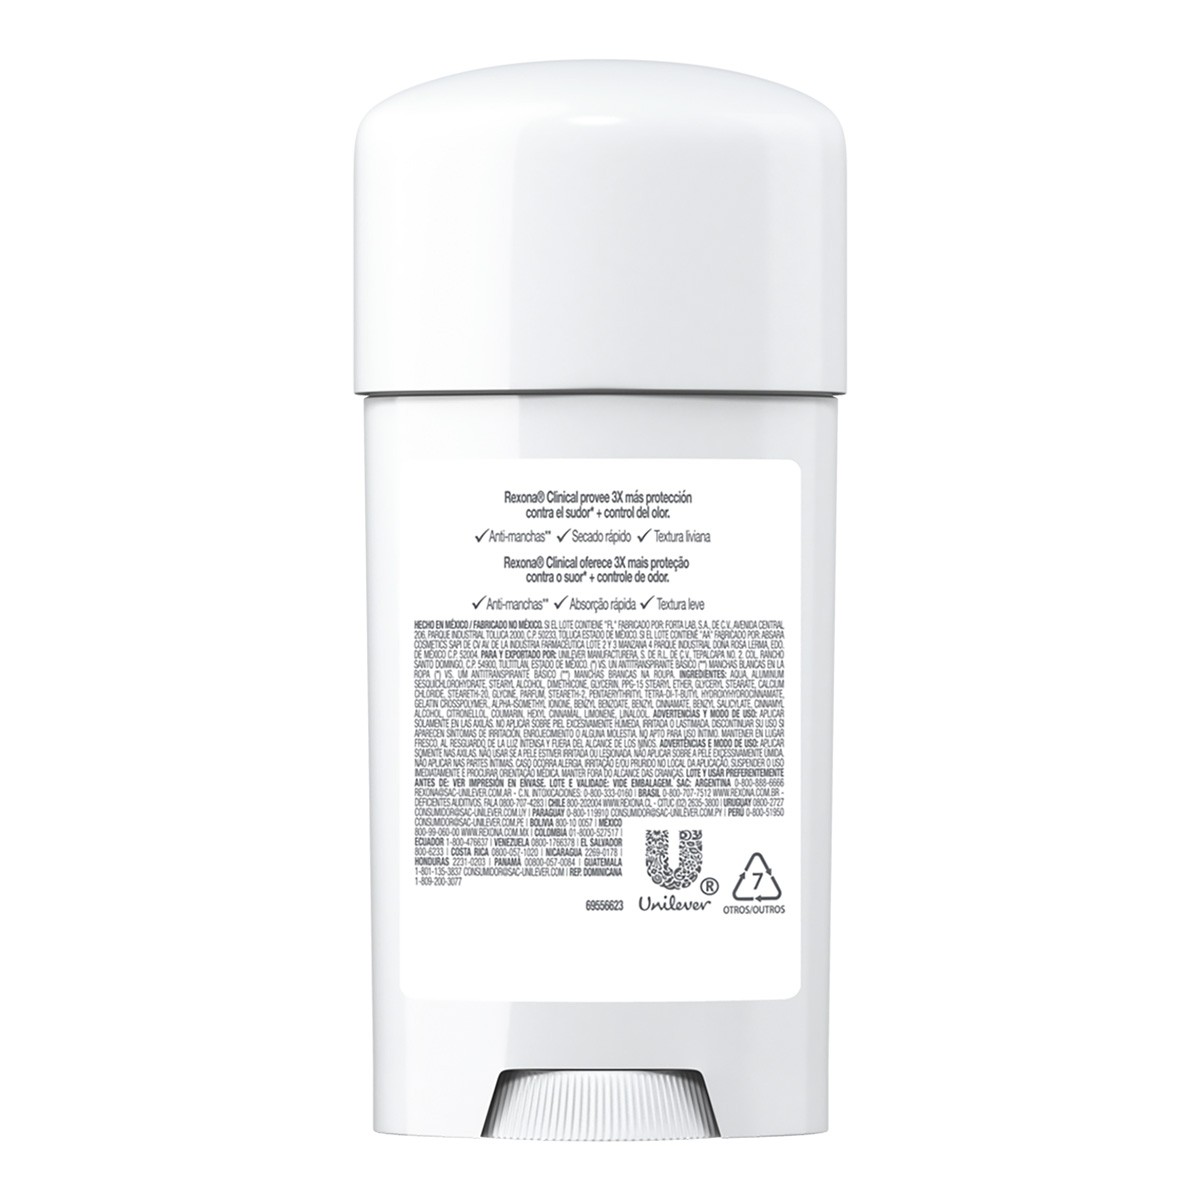 Desodorante Antitranspirante aerosol Rexona Clinical Extra Dry 96h